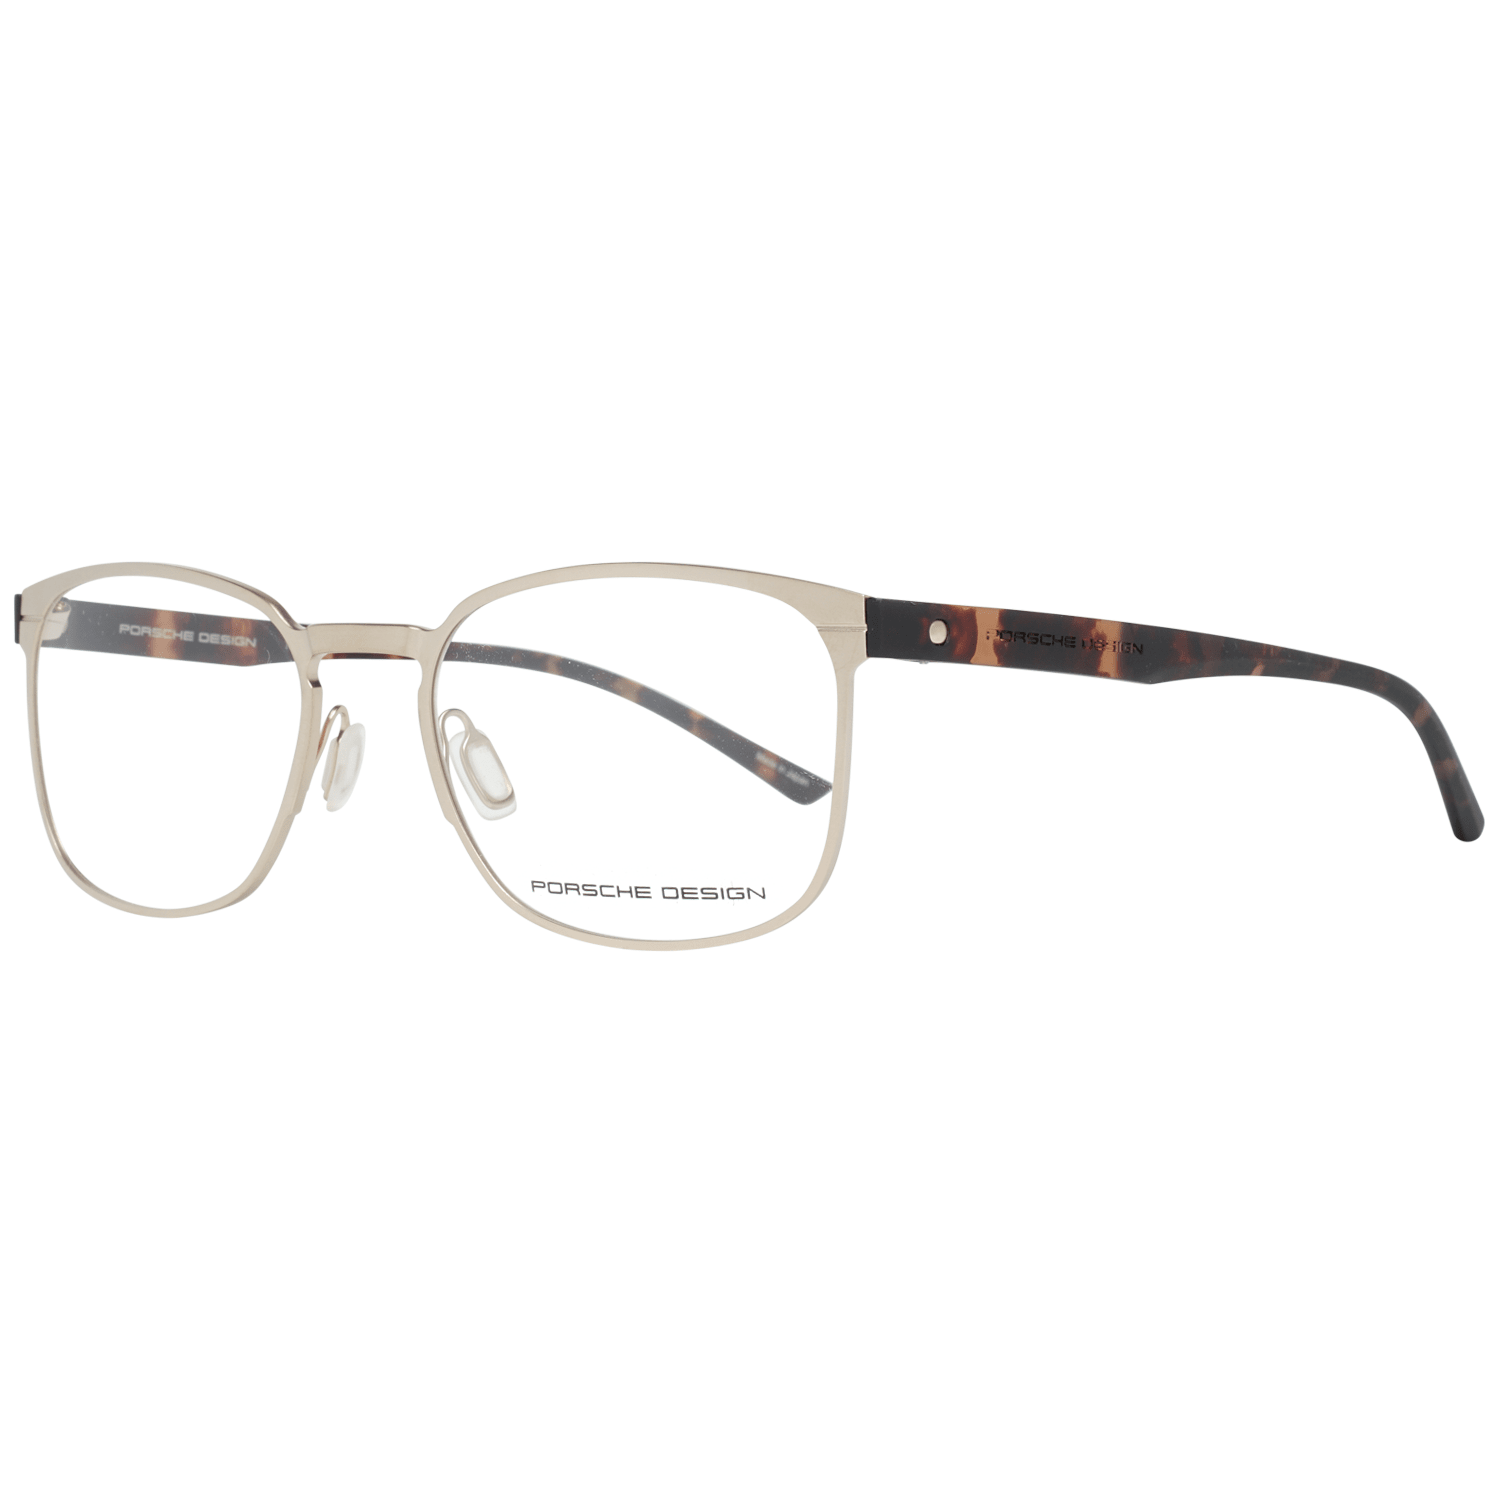 Porsche Design Men's Optical Frames Eyewear Silver P8353 54B